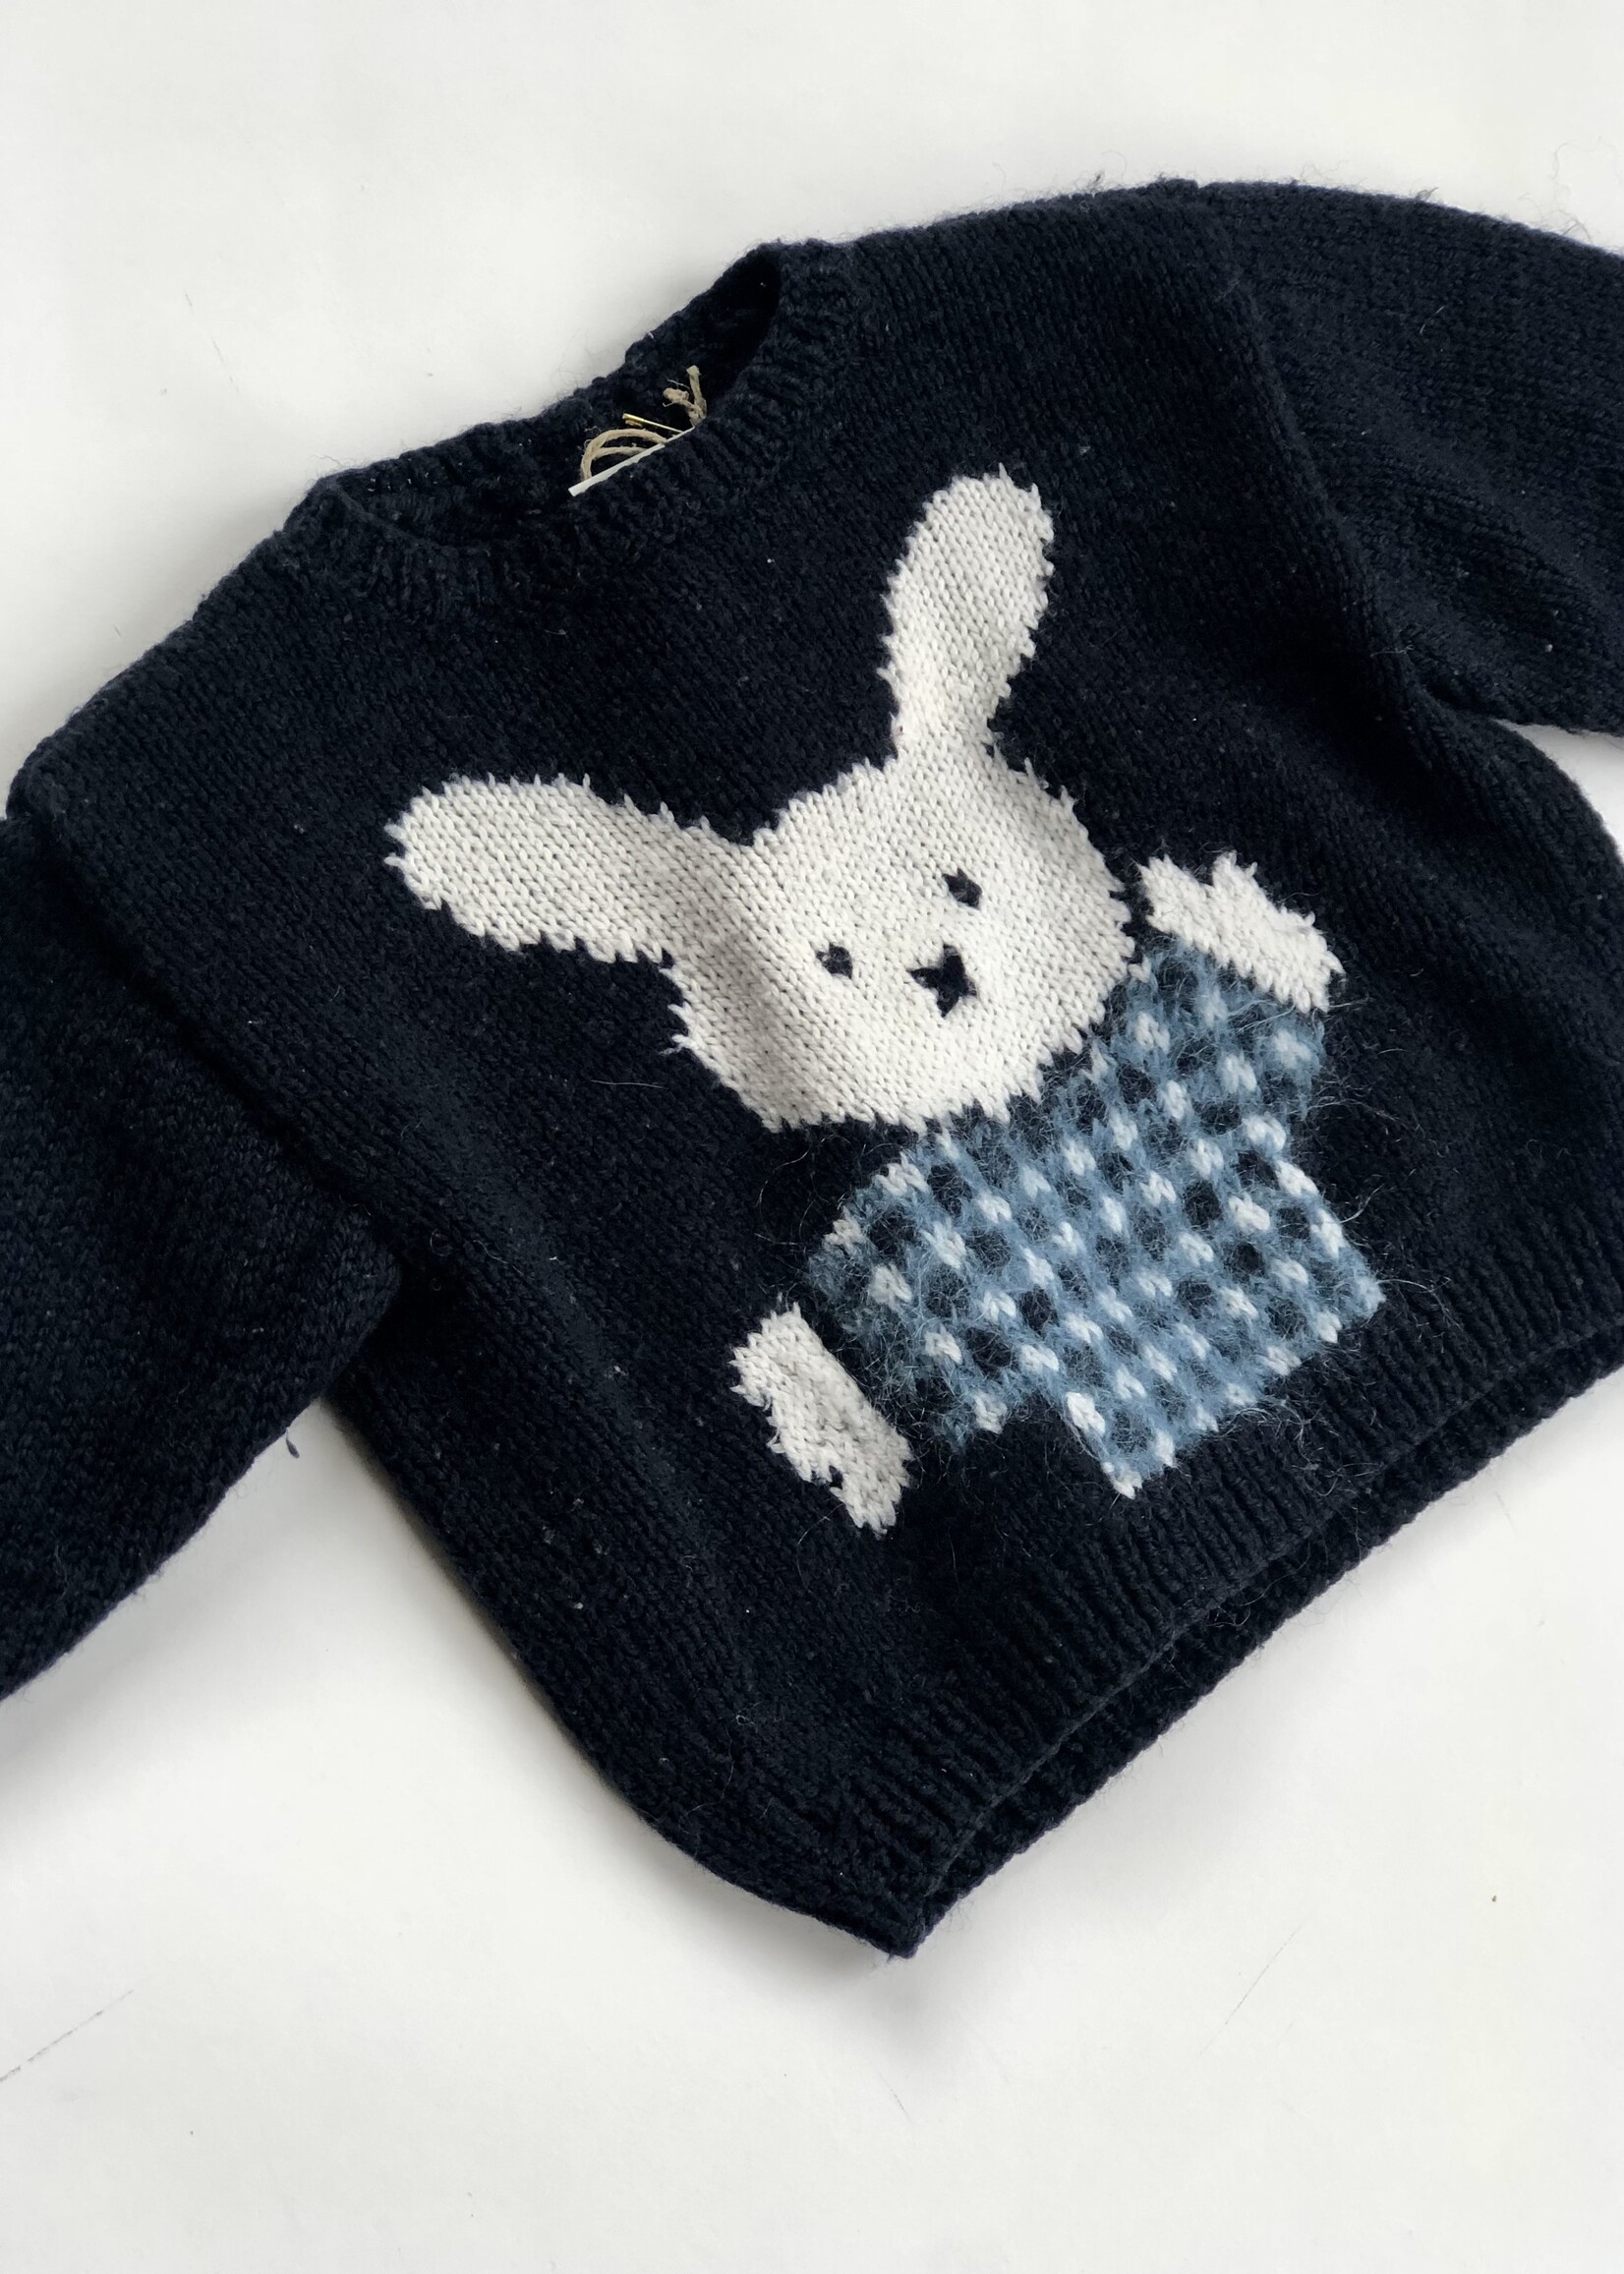 Handmade Wool Nijntje sweater 9-12m